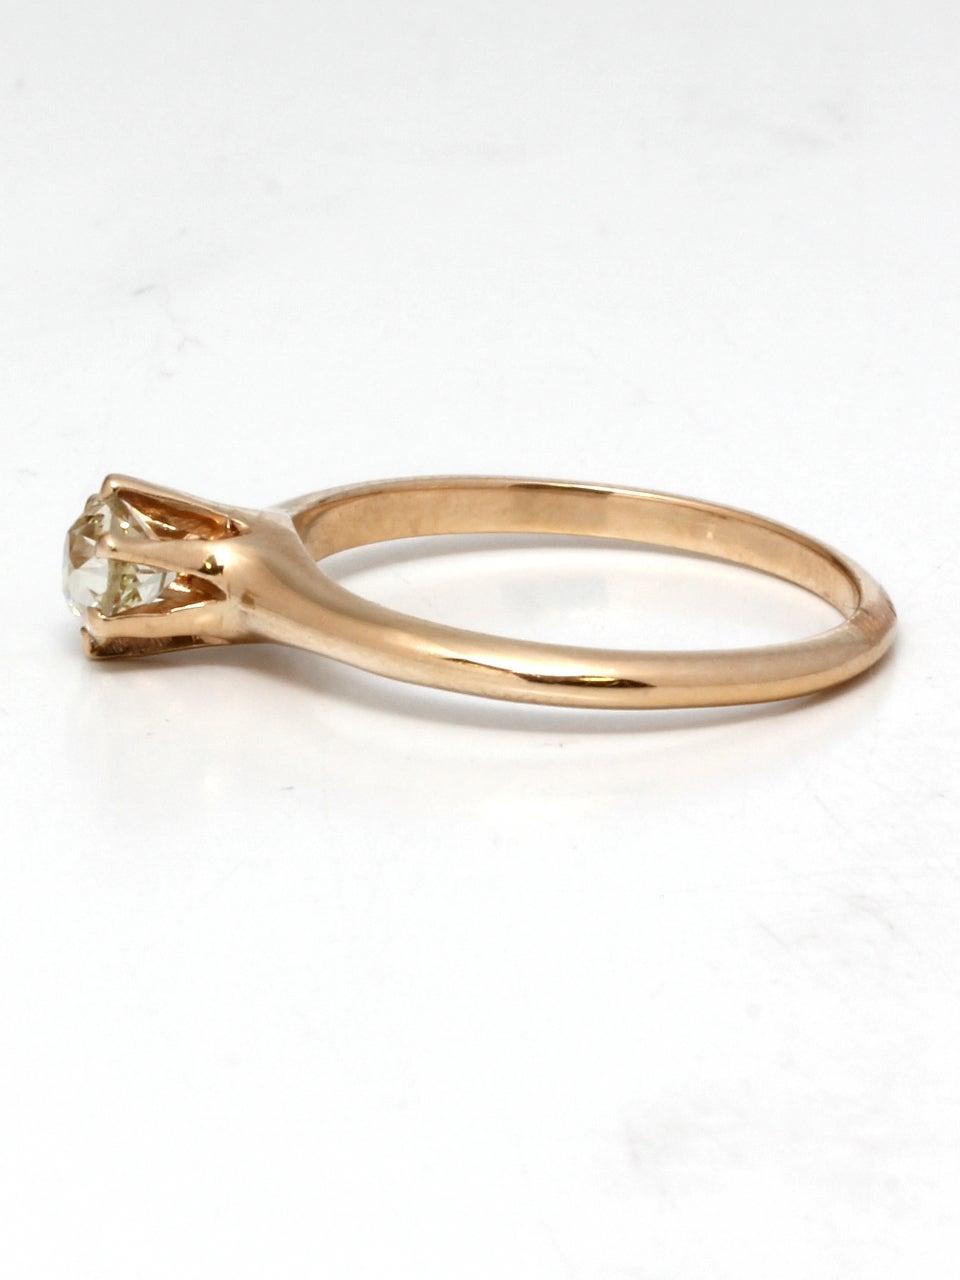 Women's 1900s Yellow Gold and Diamond Engagement Ring